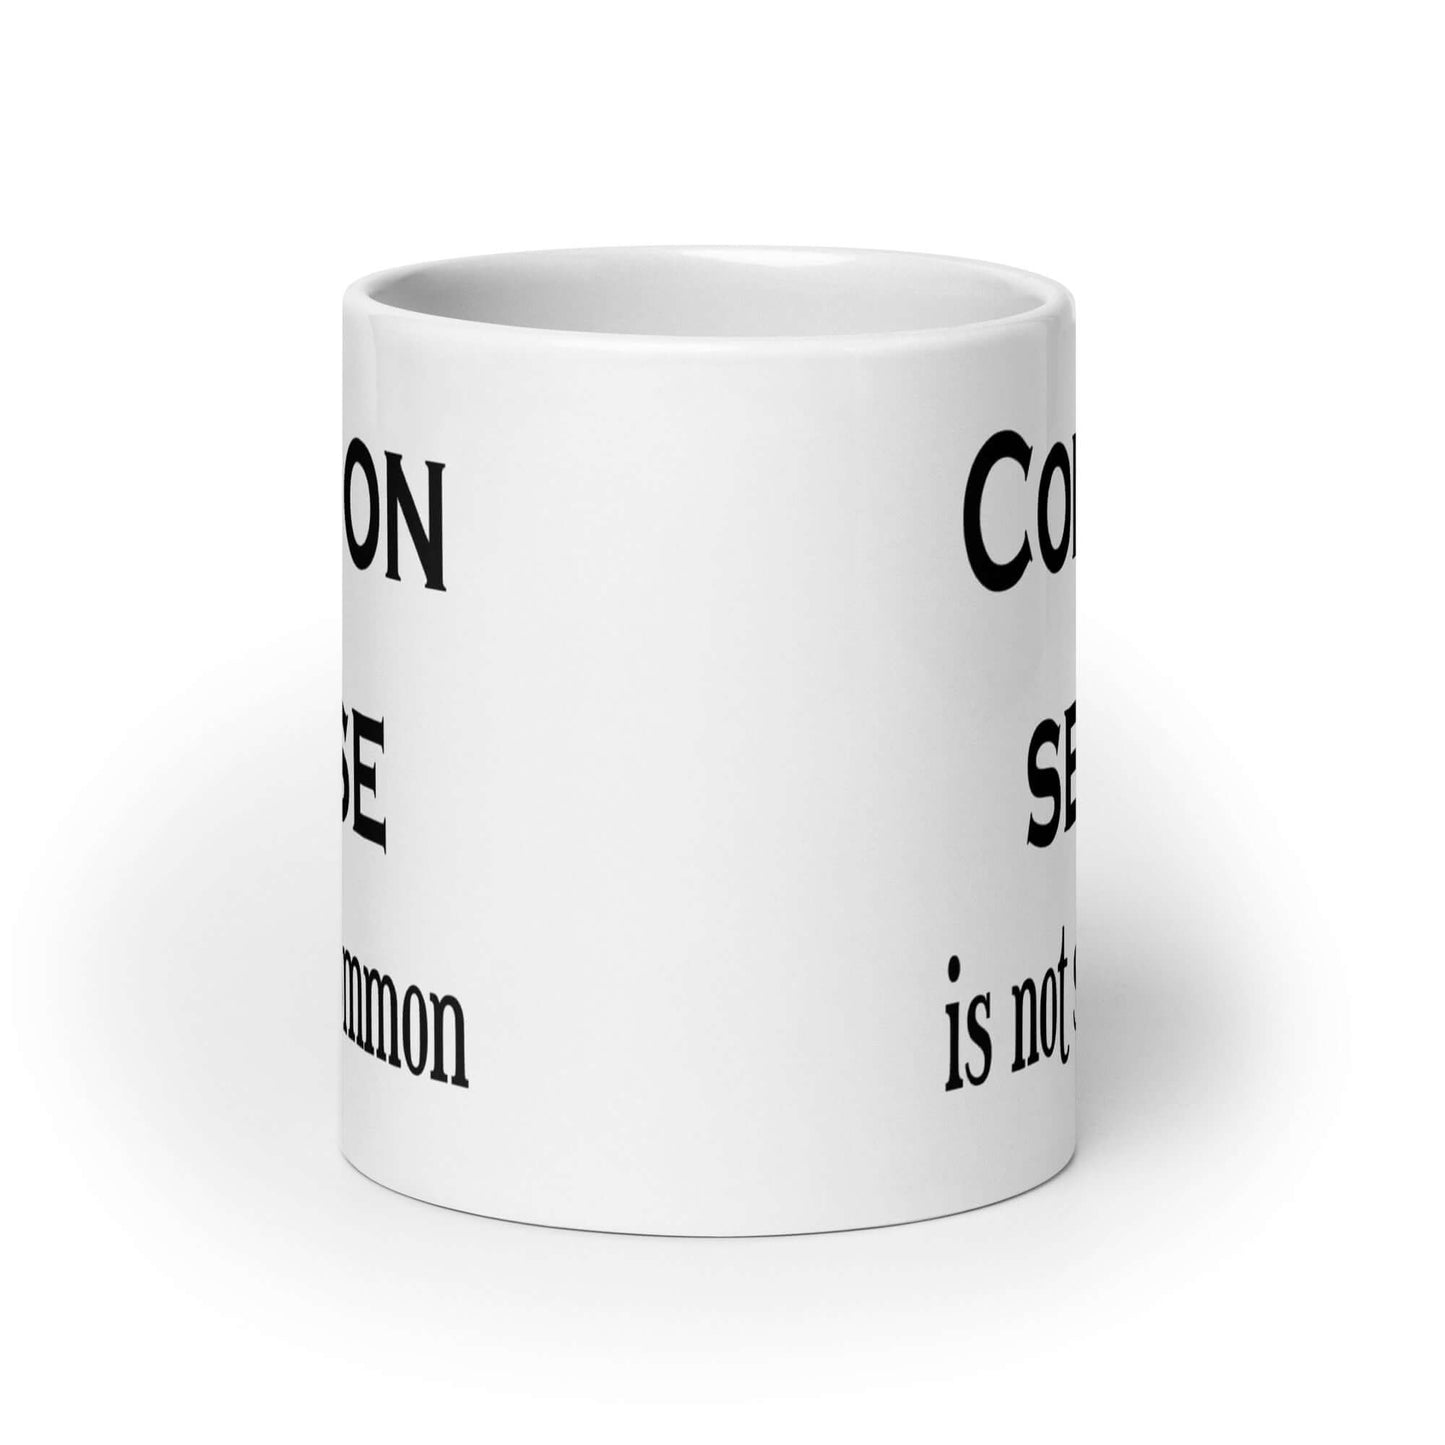 Common sense is not so common sarcastic coffee mug